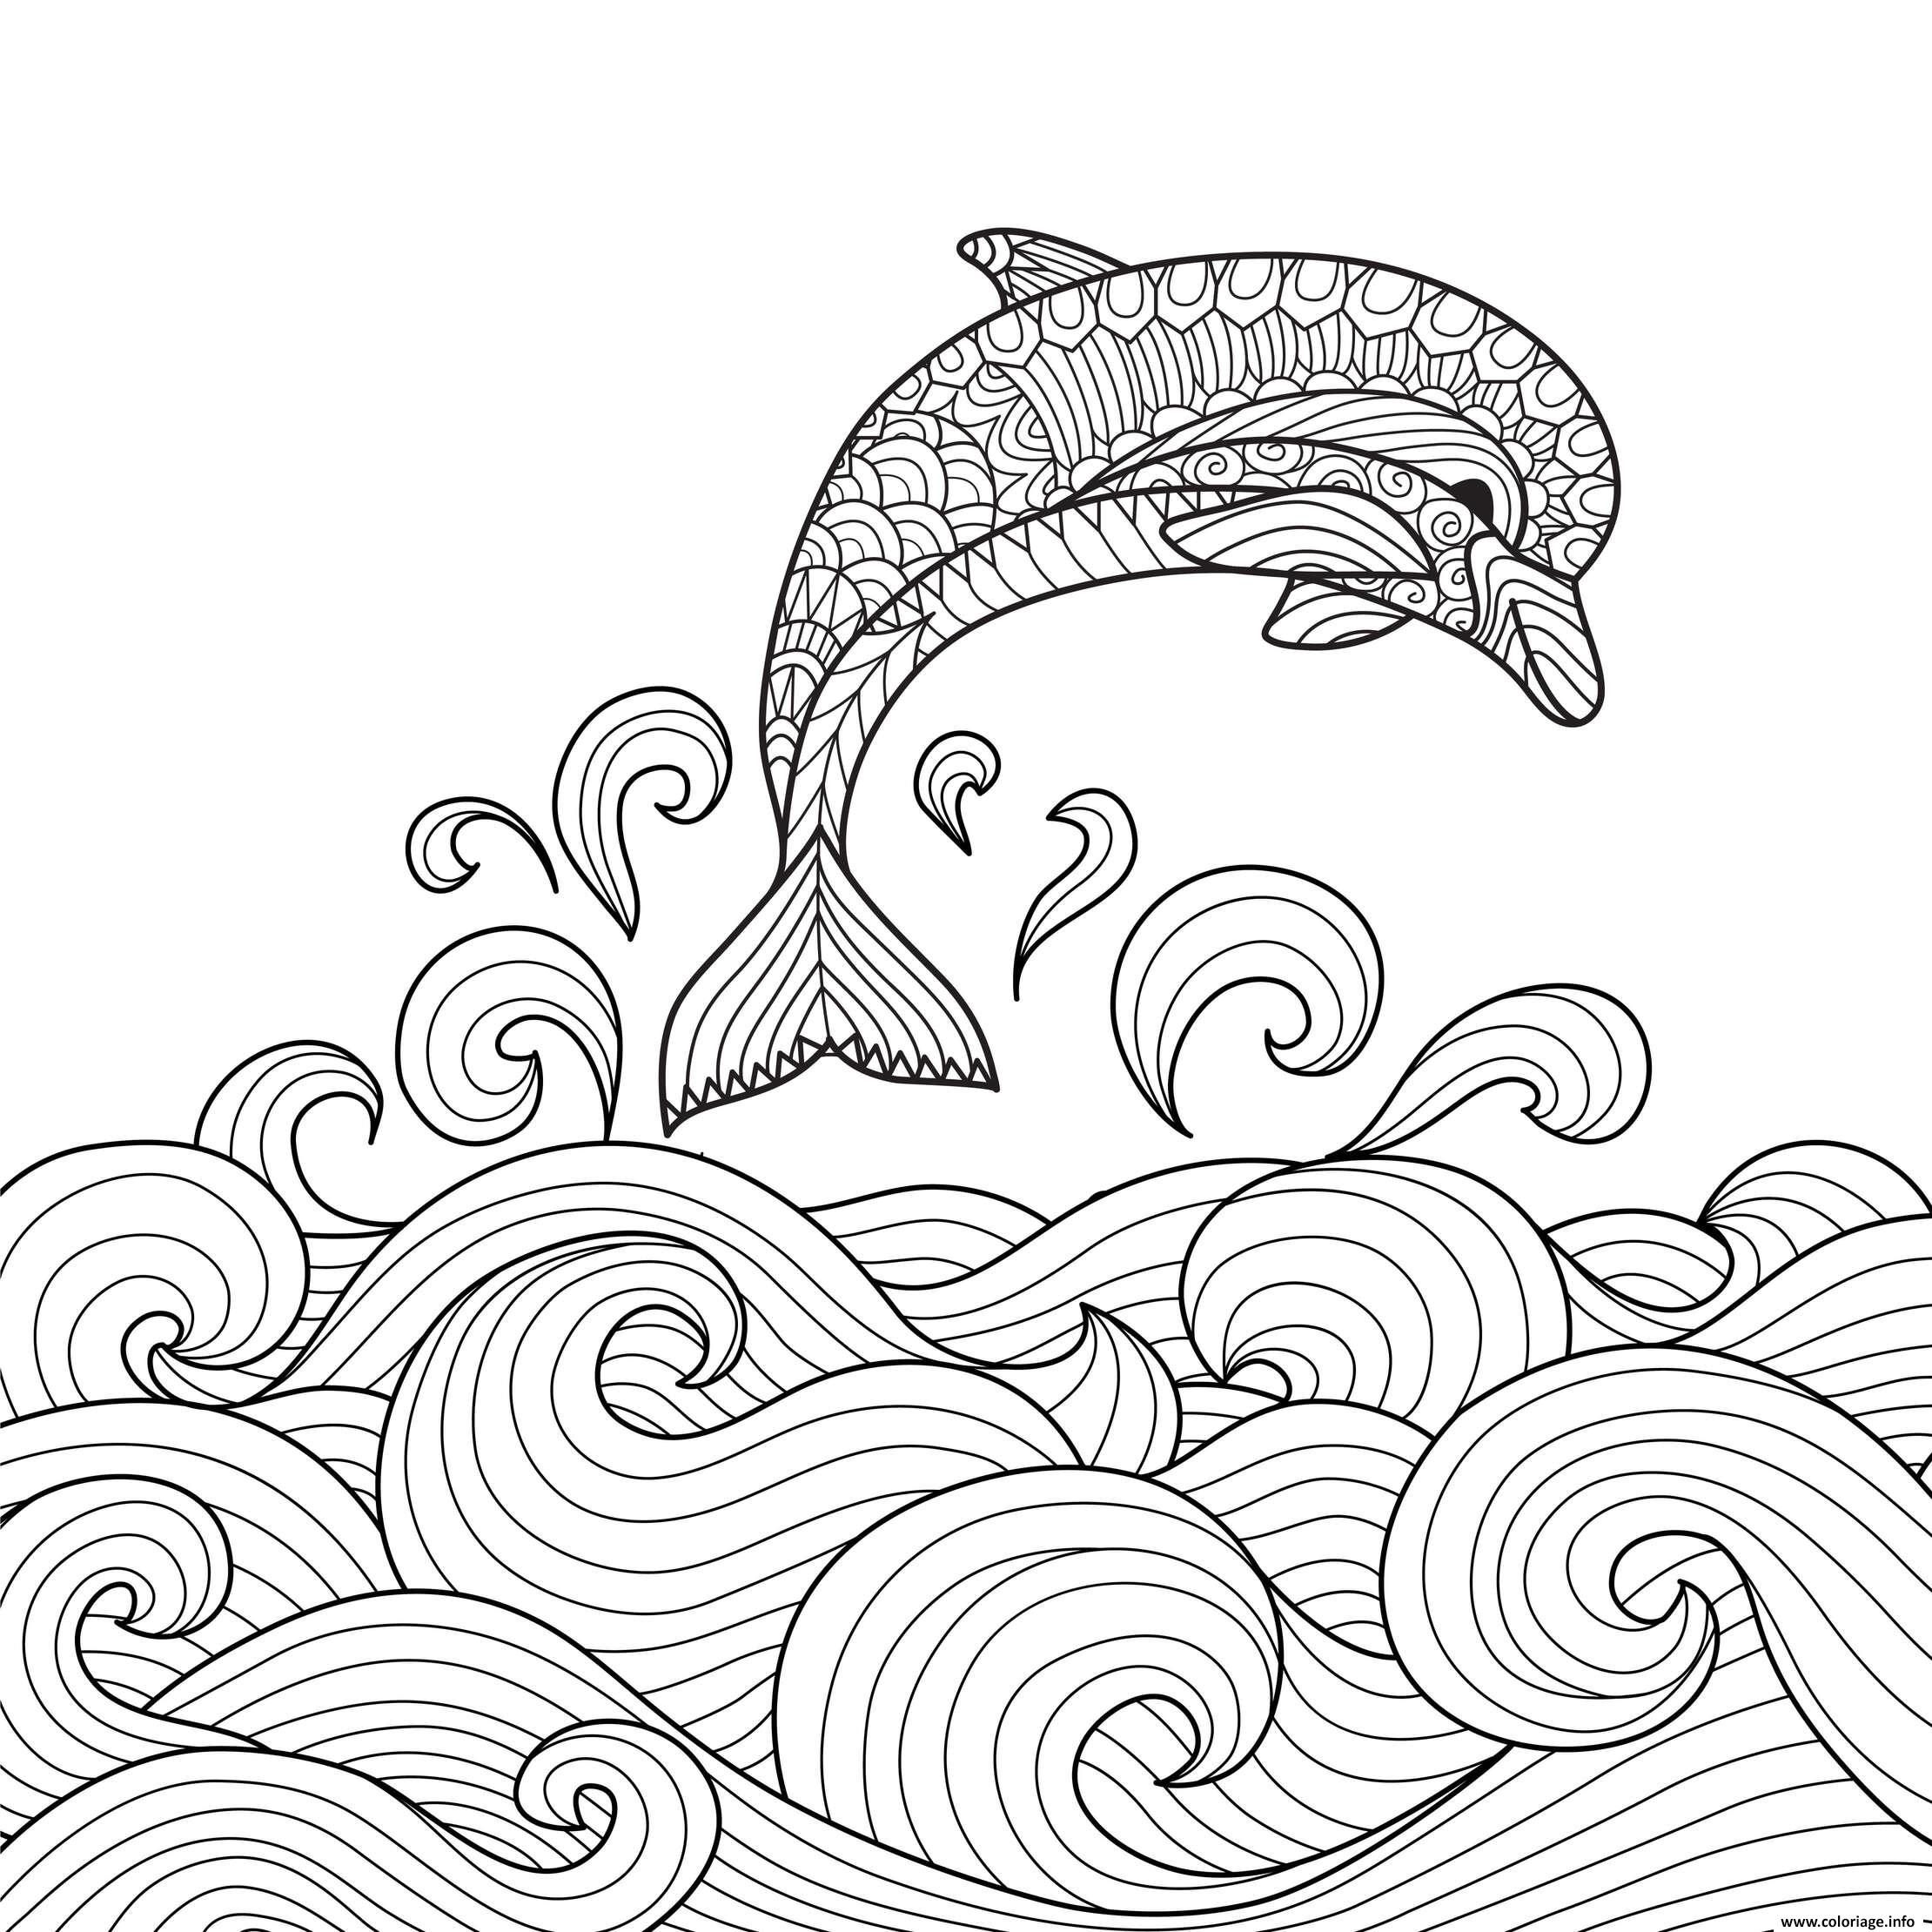 Dessin dauphin fait un saut ocean animal marin anti-stress animaux Coloriage Gratuit à Imprimer